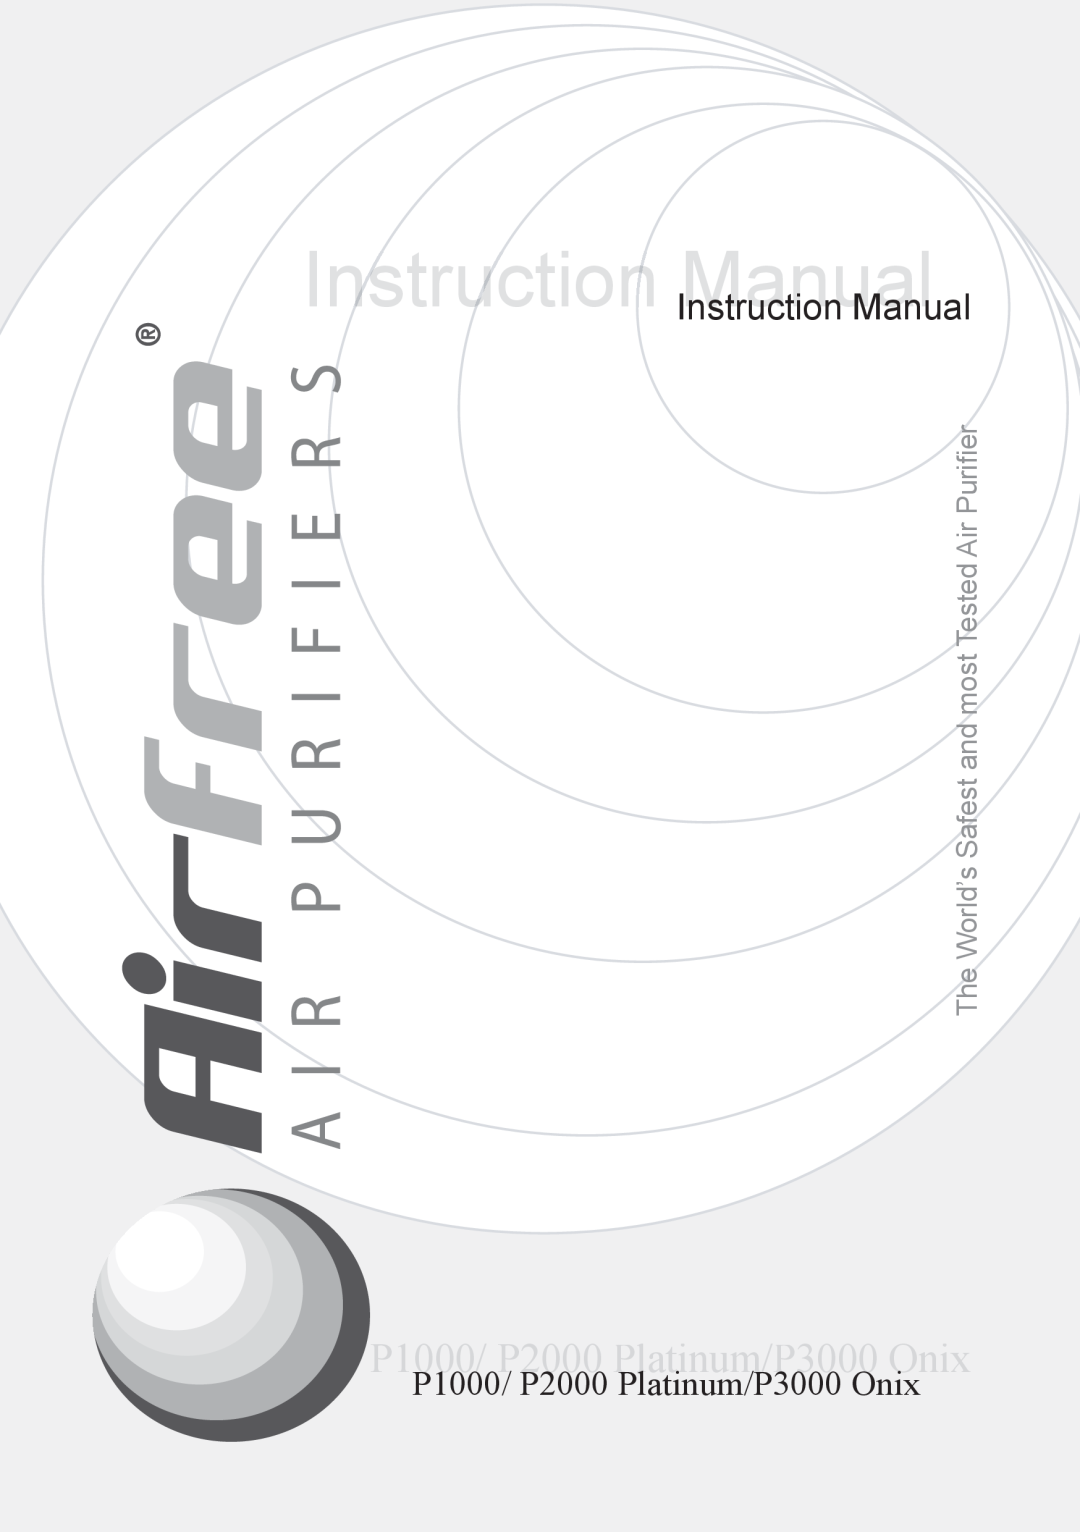 Airfree p1000 instruction manual Instruuctionn Manual, P1000/ P2000 Platinum/P3000 Onix 